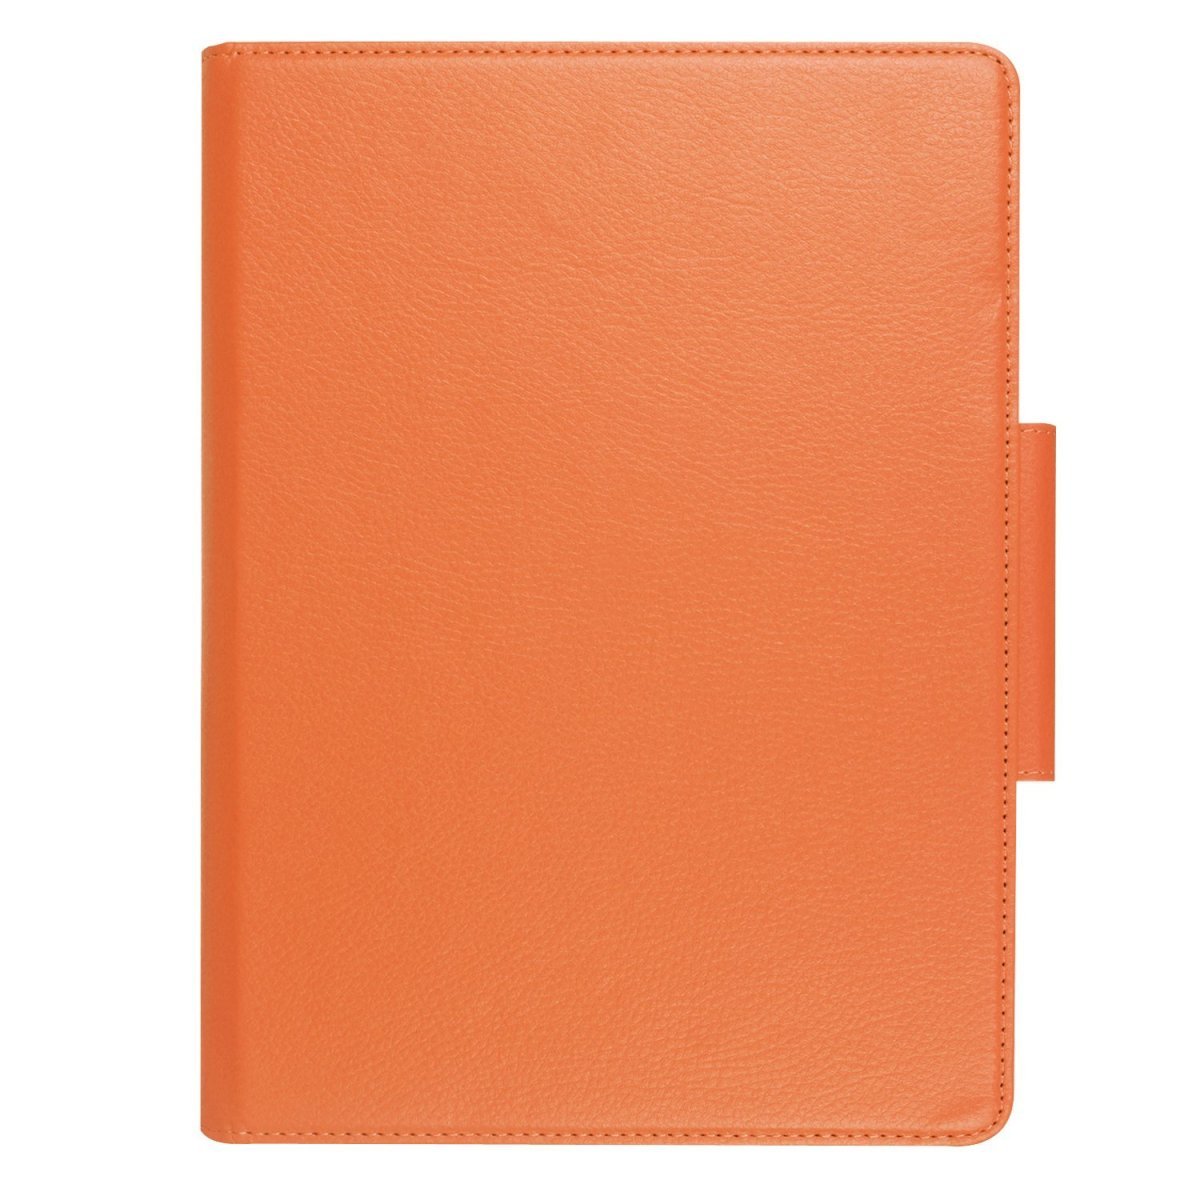 [ free shipping ]HUAWEI MediaPad M3 Lite 10 exclusive use leather case attaching Bluetooth keyboard *US arrangement * Japanese input correspondence * orange 